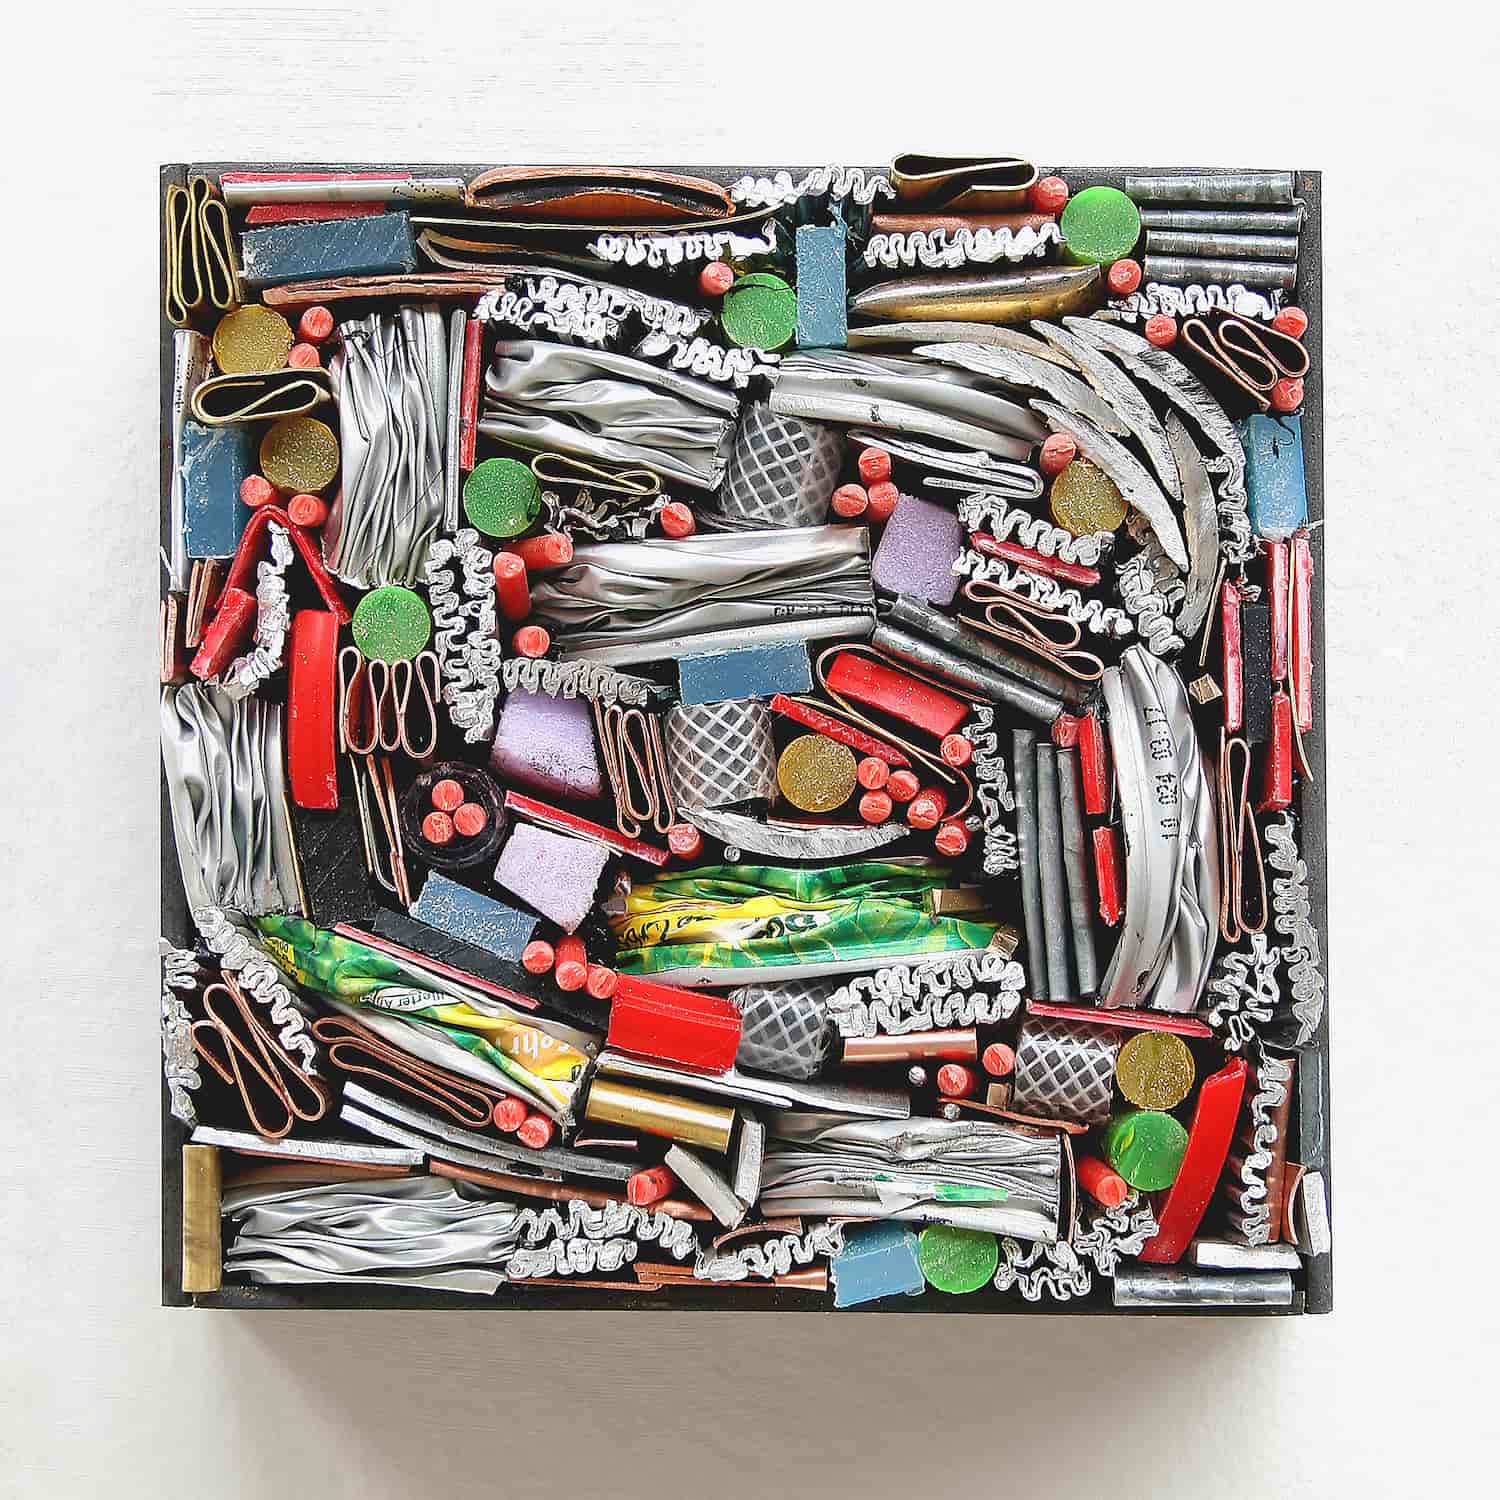 „o. T.“, Recycling, Mix, 20 x 20 cm, 2012